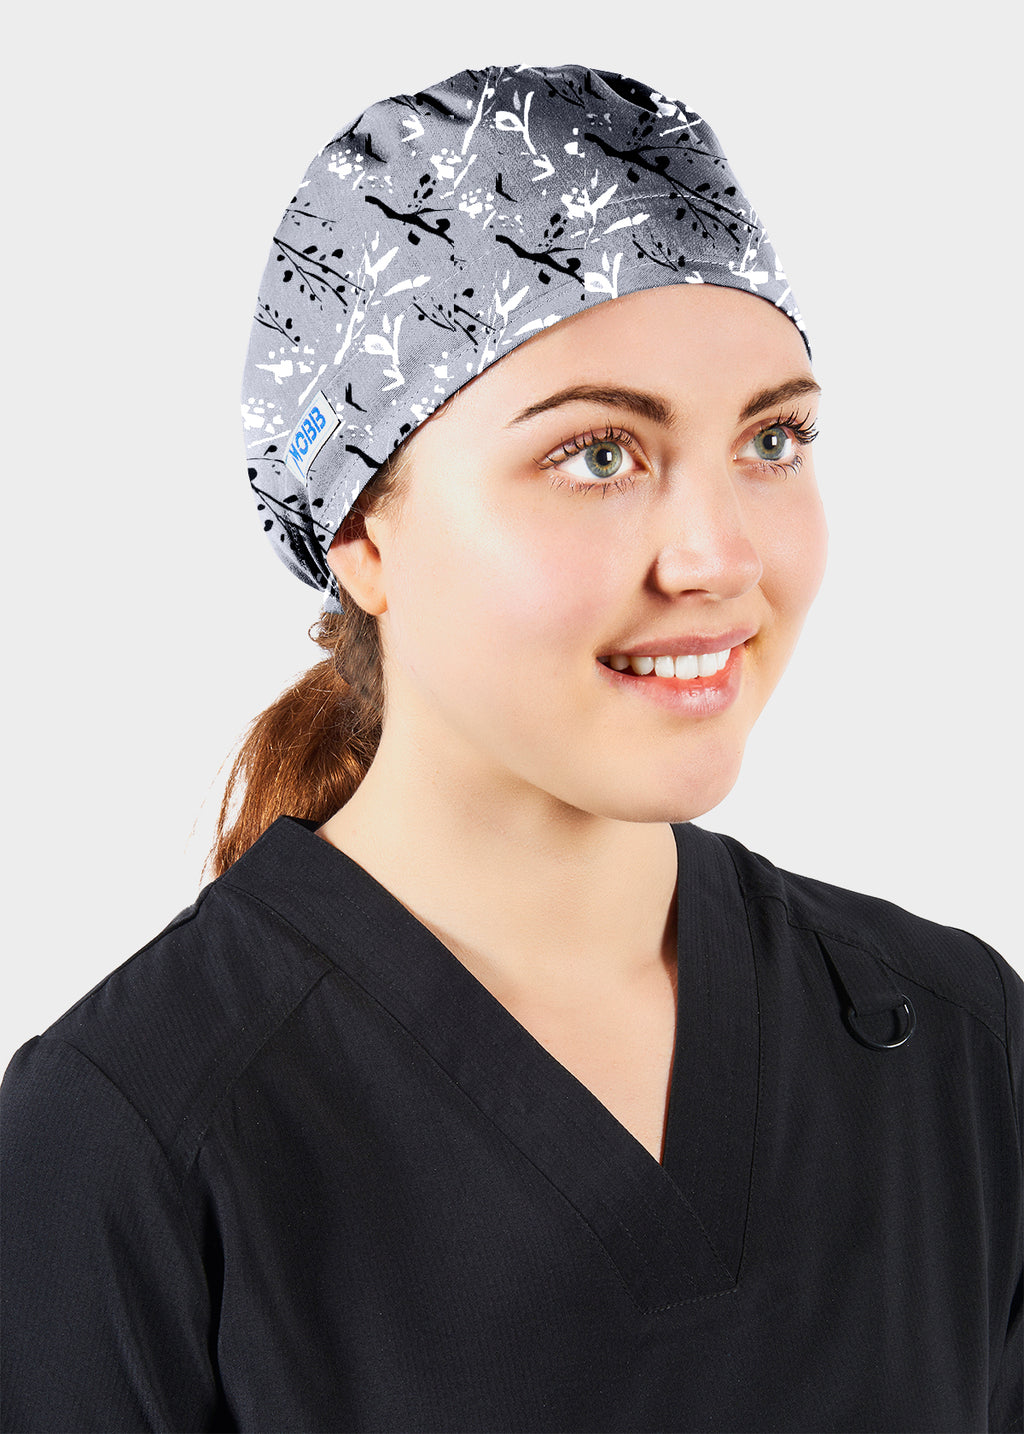 Product - MOBB Deluxe Surgeon's Cap